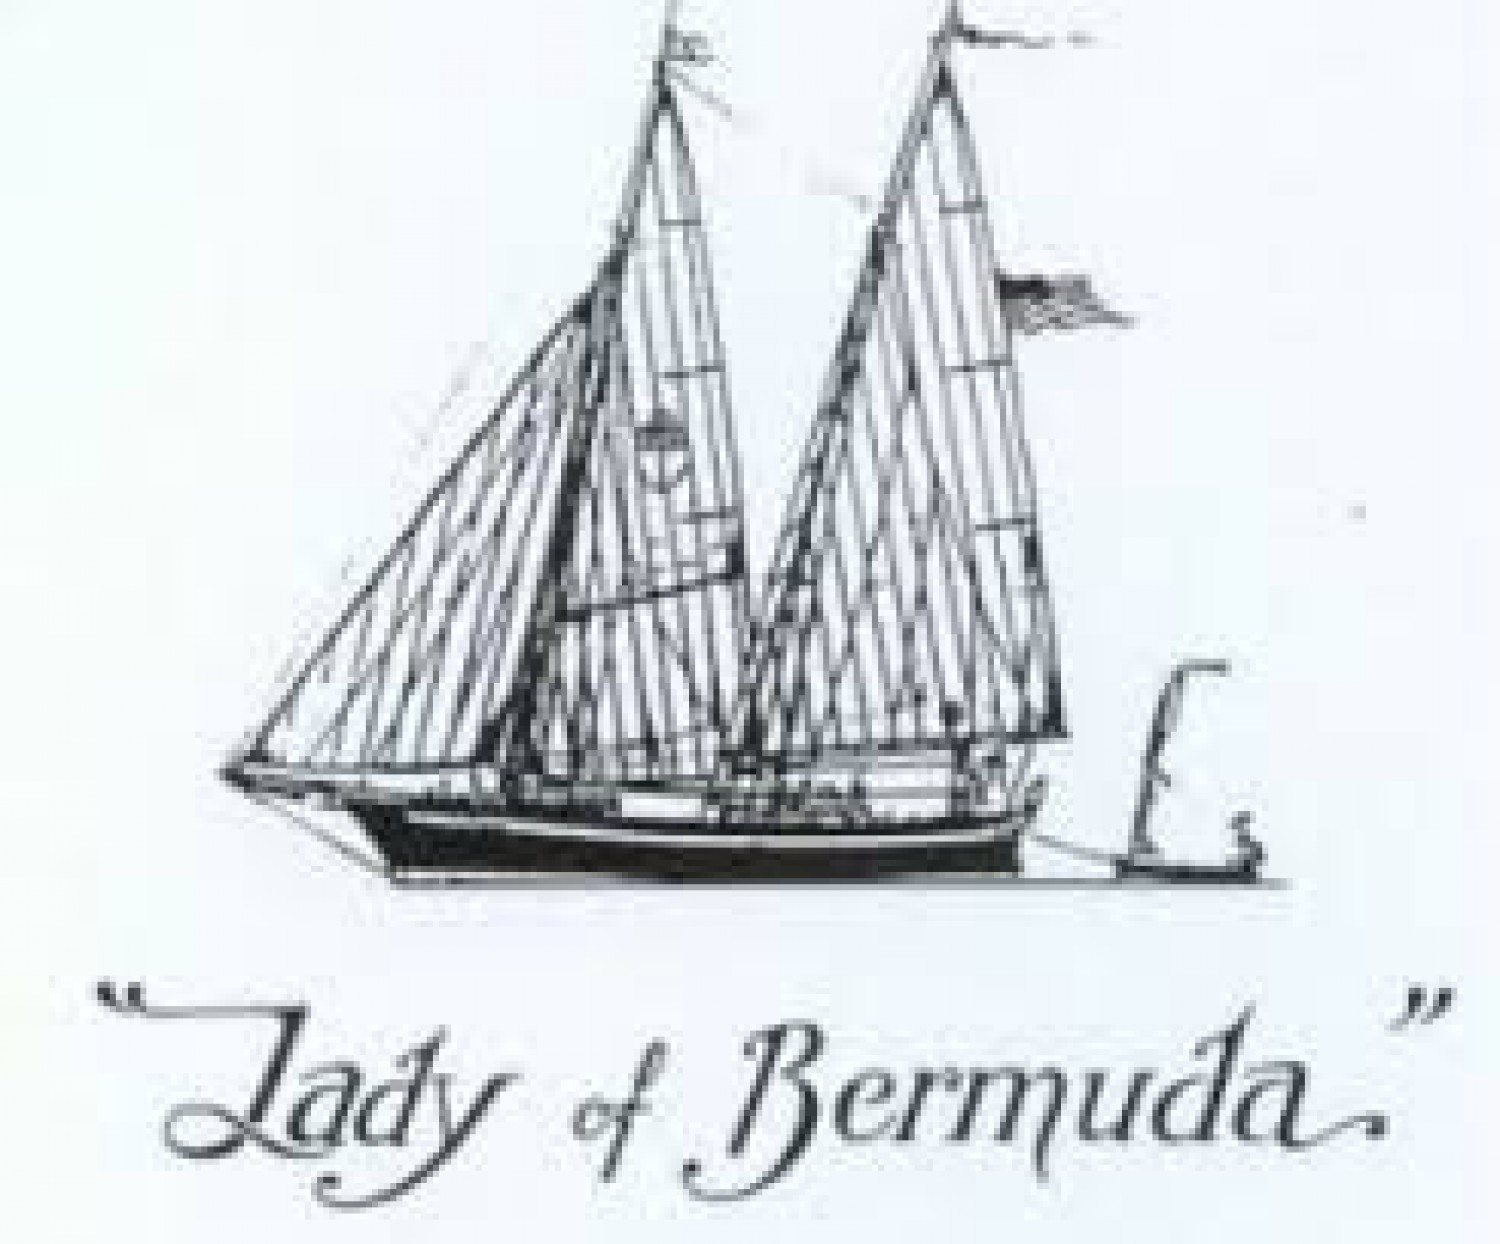 slider 5 CN du Nouveau Monde Goelette lady of bermuda